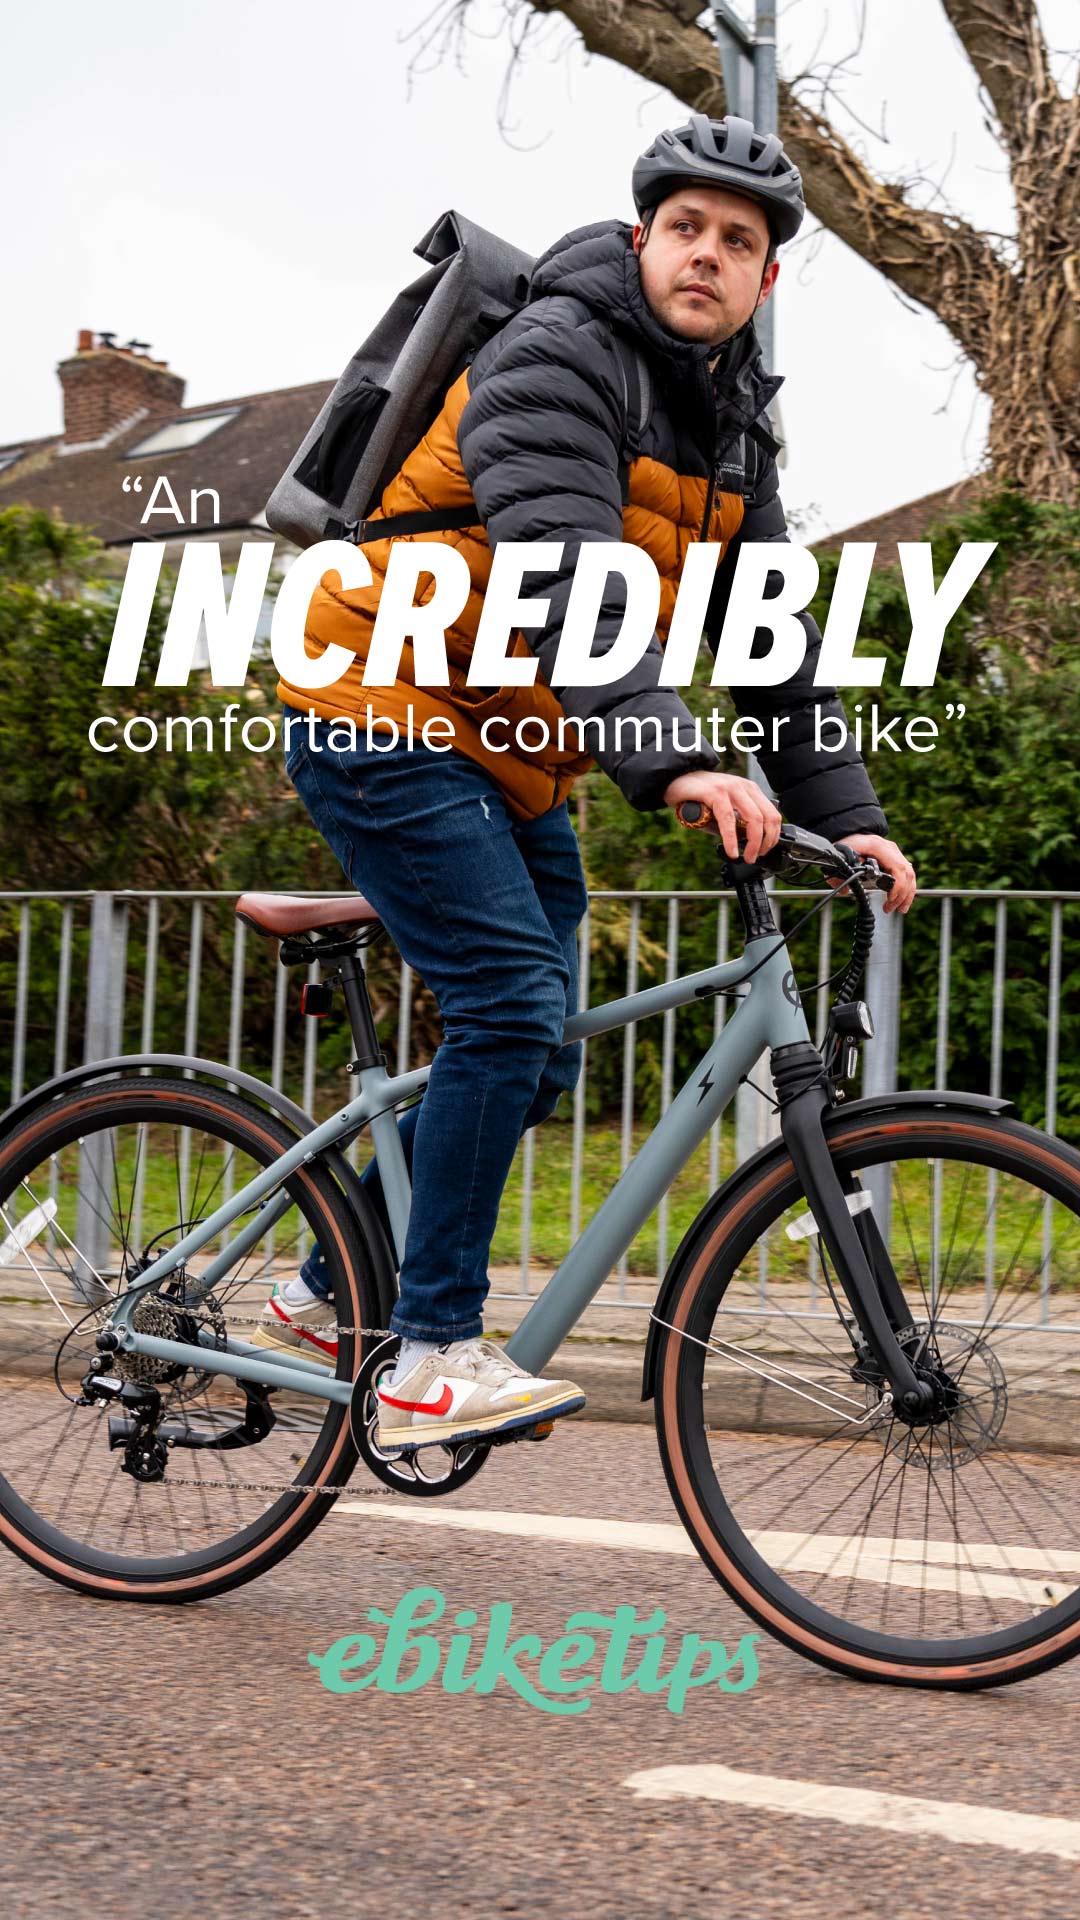 The Estarli e28.8 is "an incredibly comfortable commuter bike" according to EbikeTips